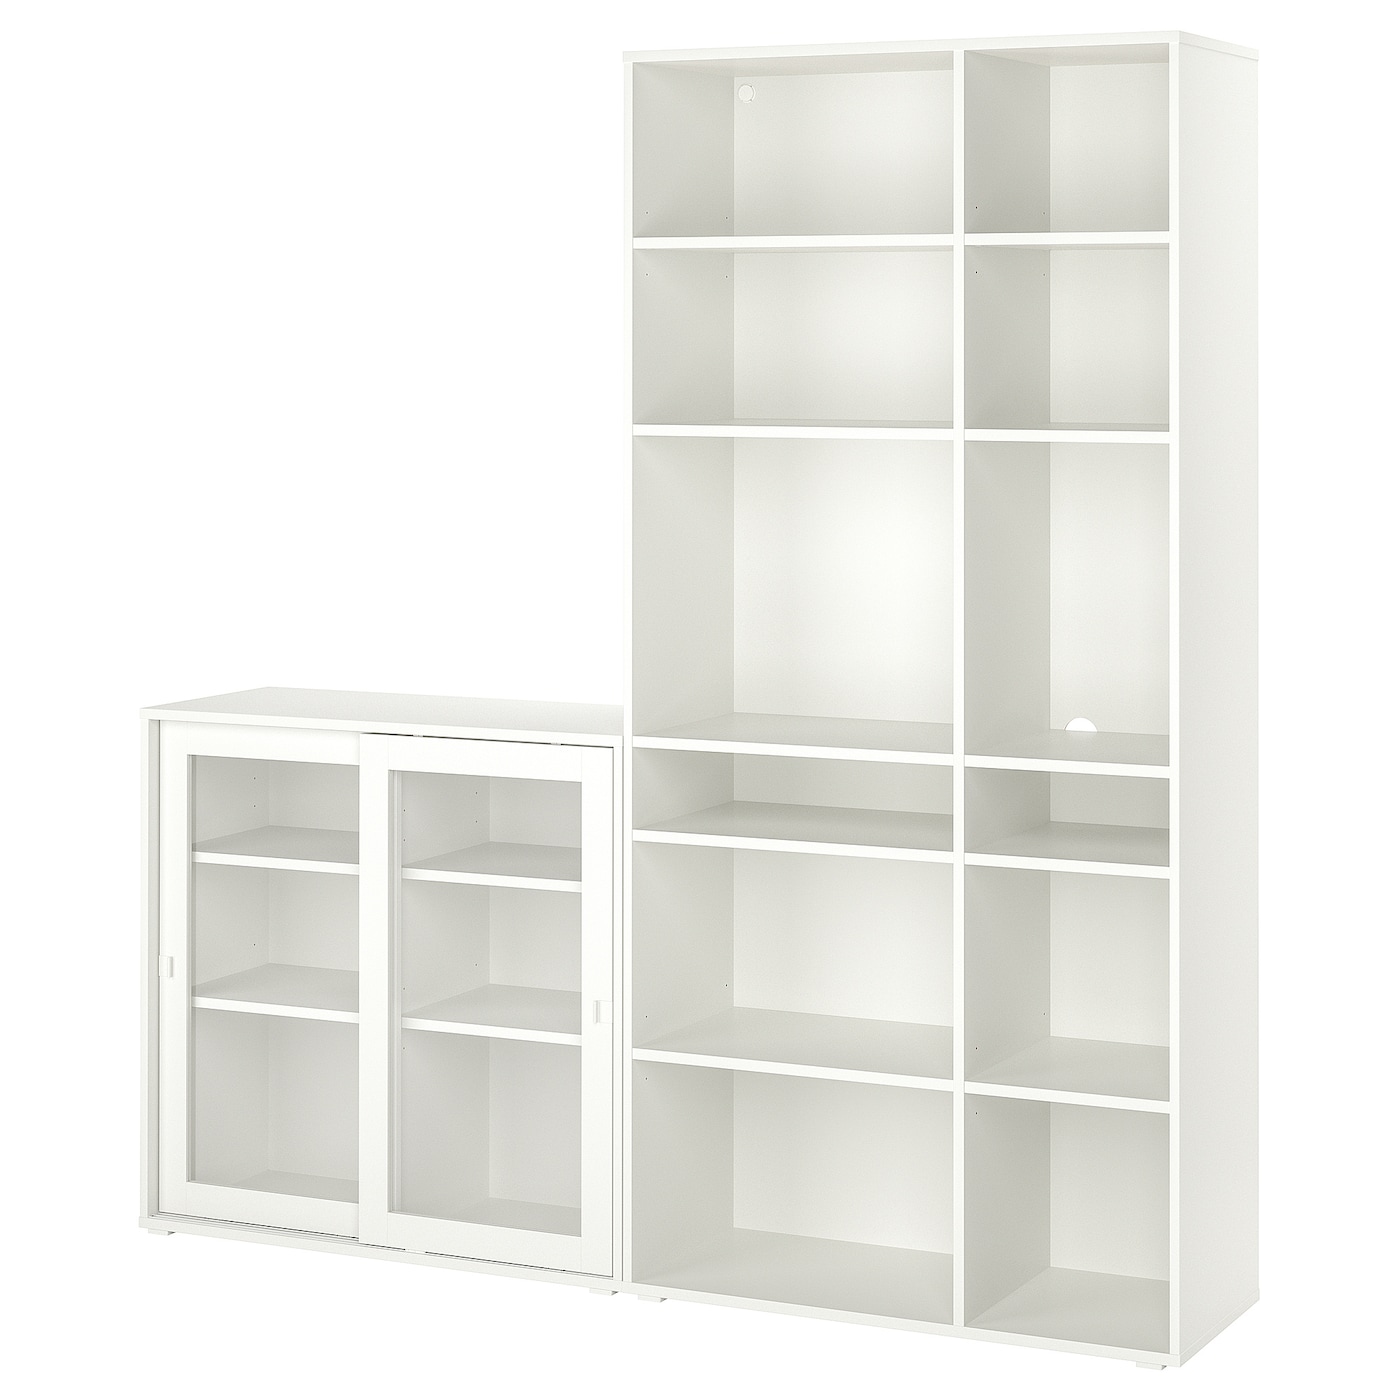 Книжный шкаф - VIHALS IKEA/ ВИХАЛС ИКЕА,   200х190 см, белый